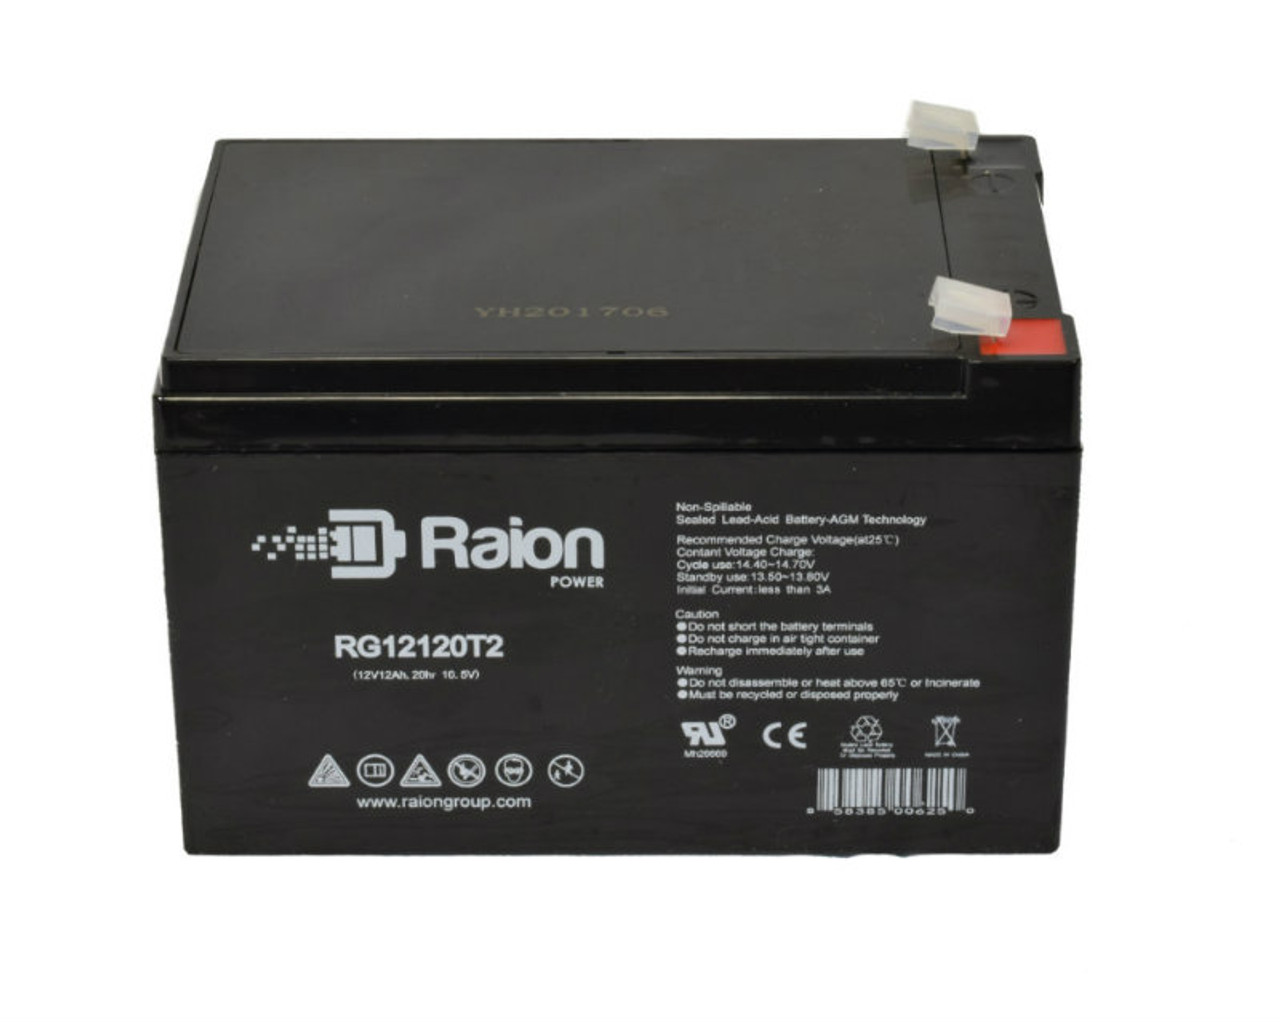 Raion Power RG12120T2 SLA Battery for Sonnenschein A212/10S